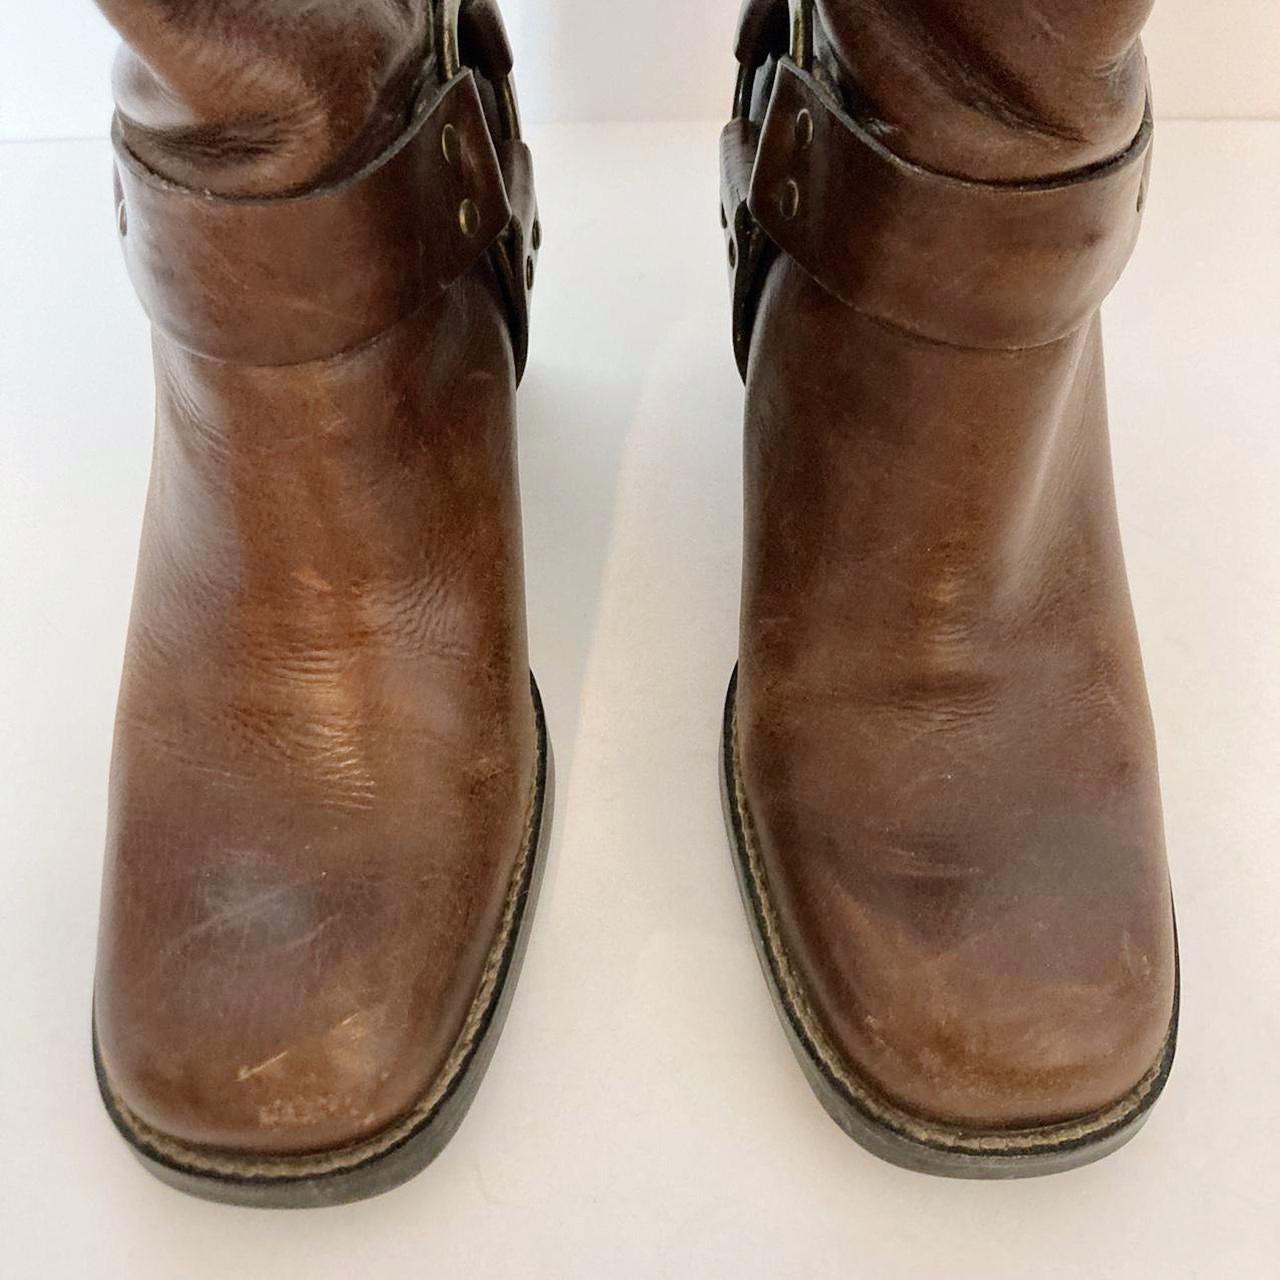 Vintage MIA brown leather square toe biker boots 🏍... - Depop